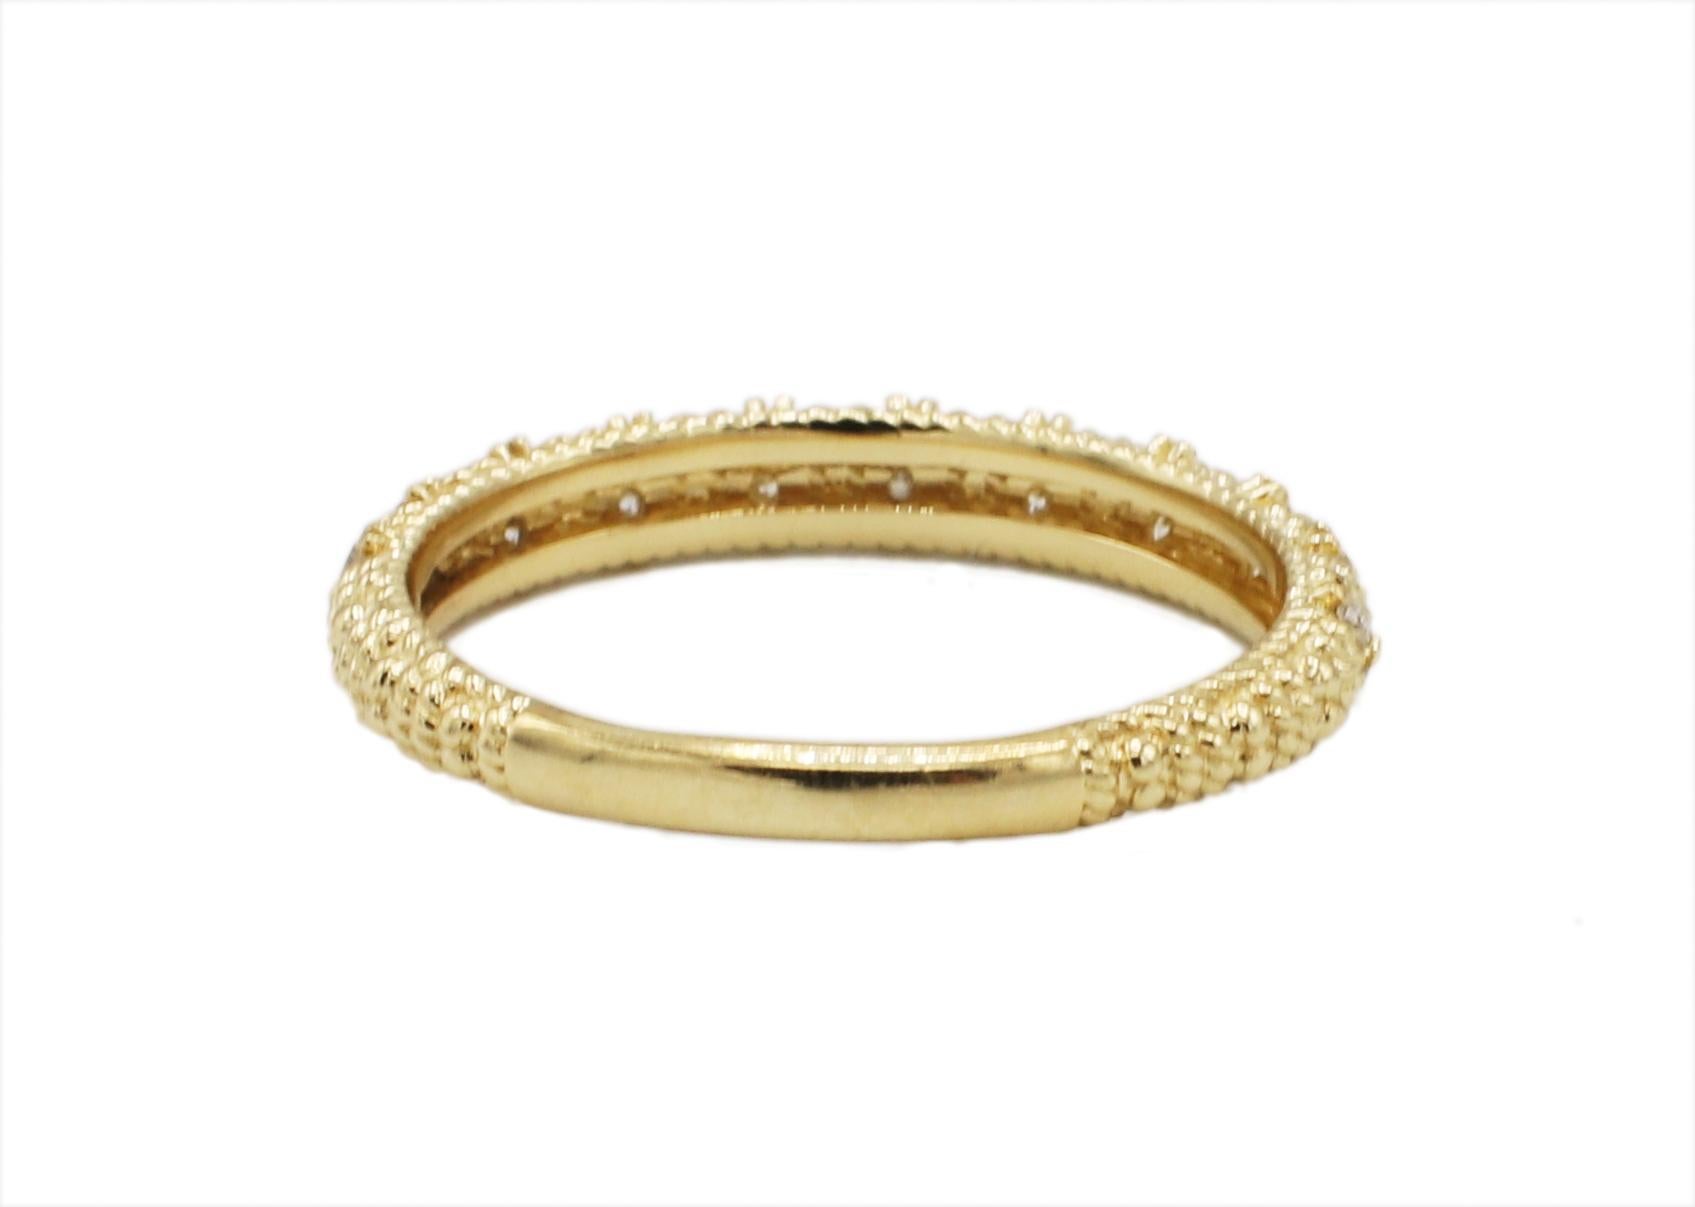 Modern Judith Ripka 14 Karat Yellow Gold & Natural Diamond Band Ring For Sale